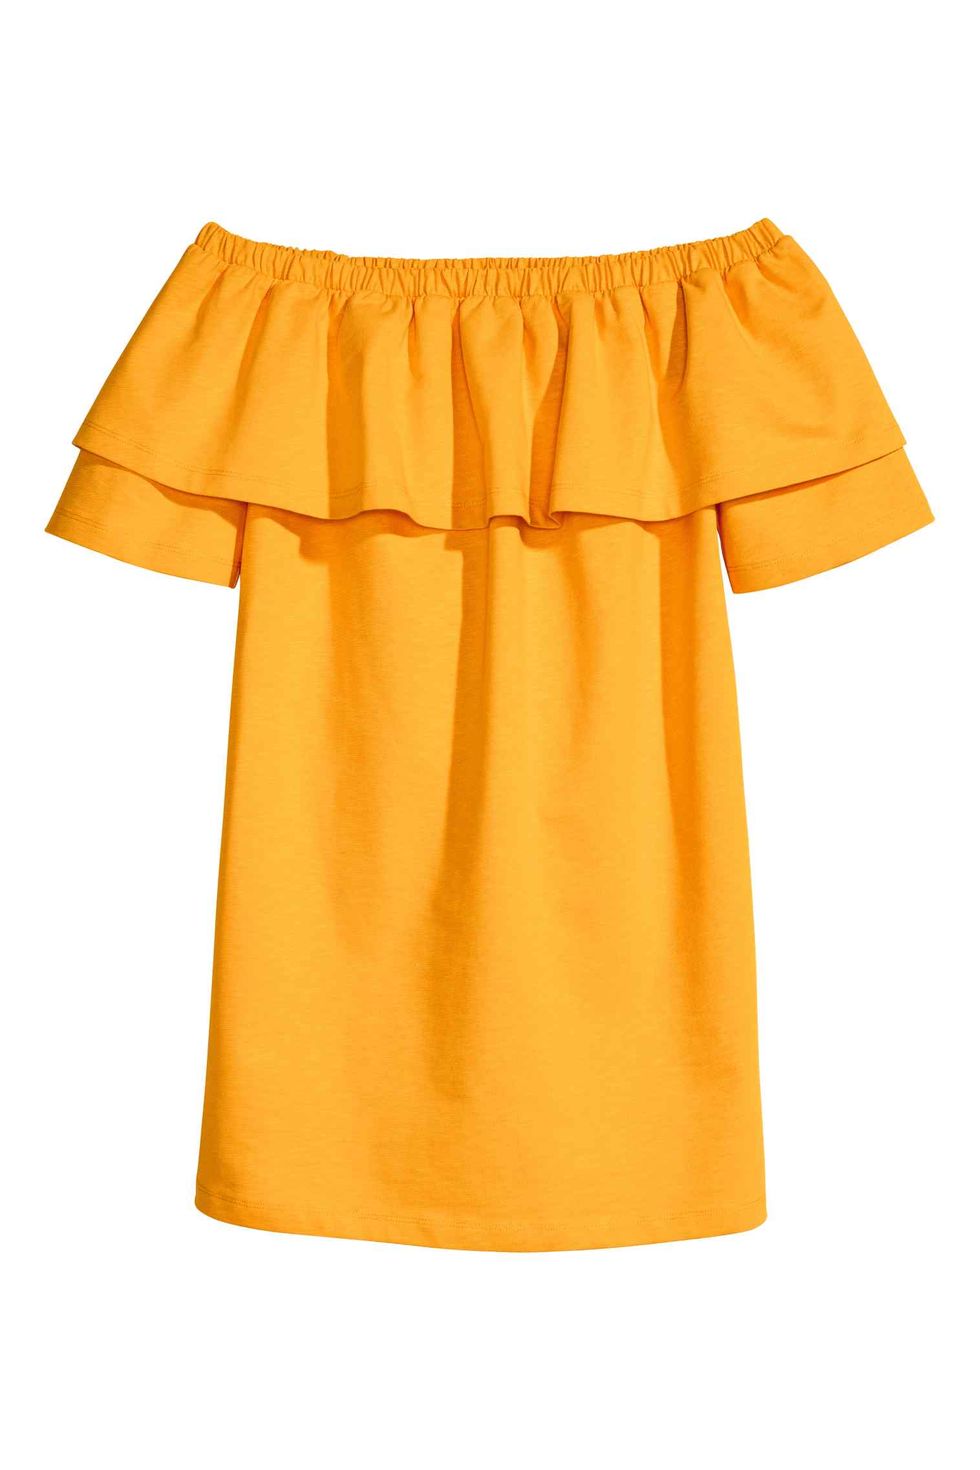 Clothing, Yellow, Orange, Sleeve, Blouse, Textile, Dress, Day dress, Neck, A-line, 